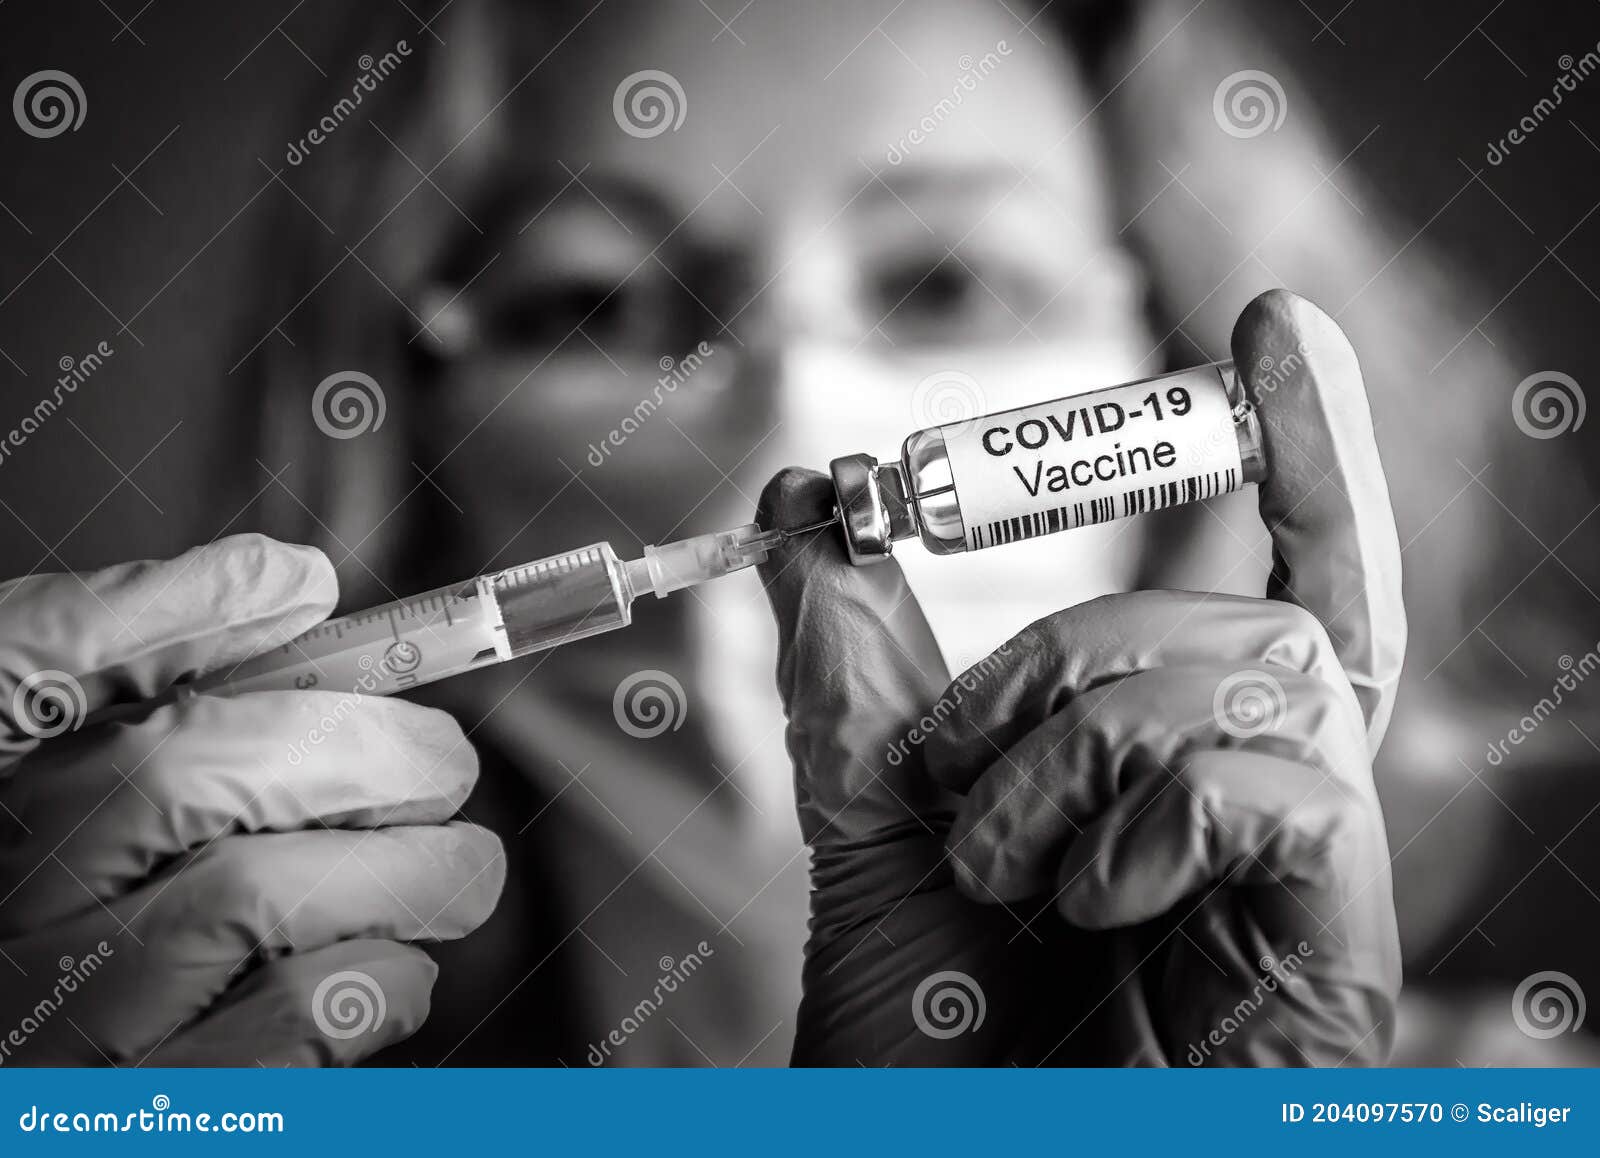 coronavirus vaccine bottle and syringe in doctorÃ¢â¬â¢s hands